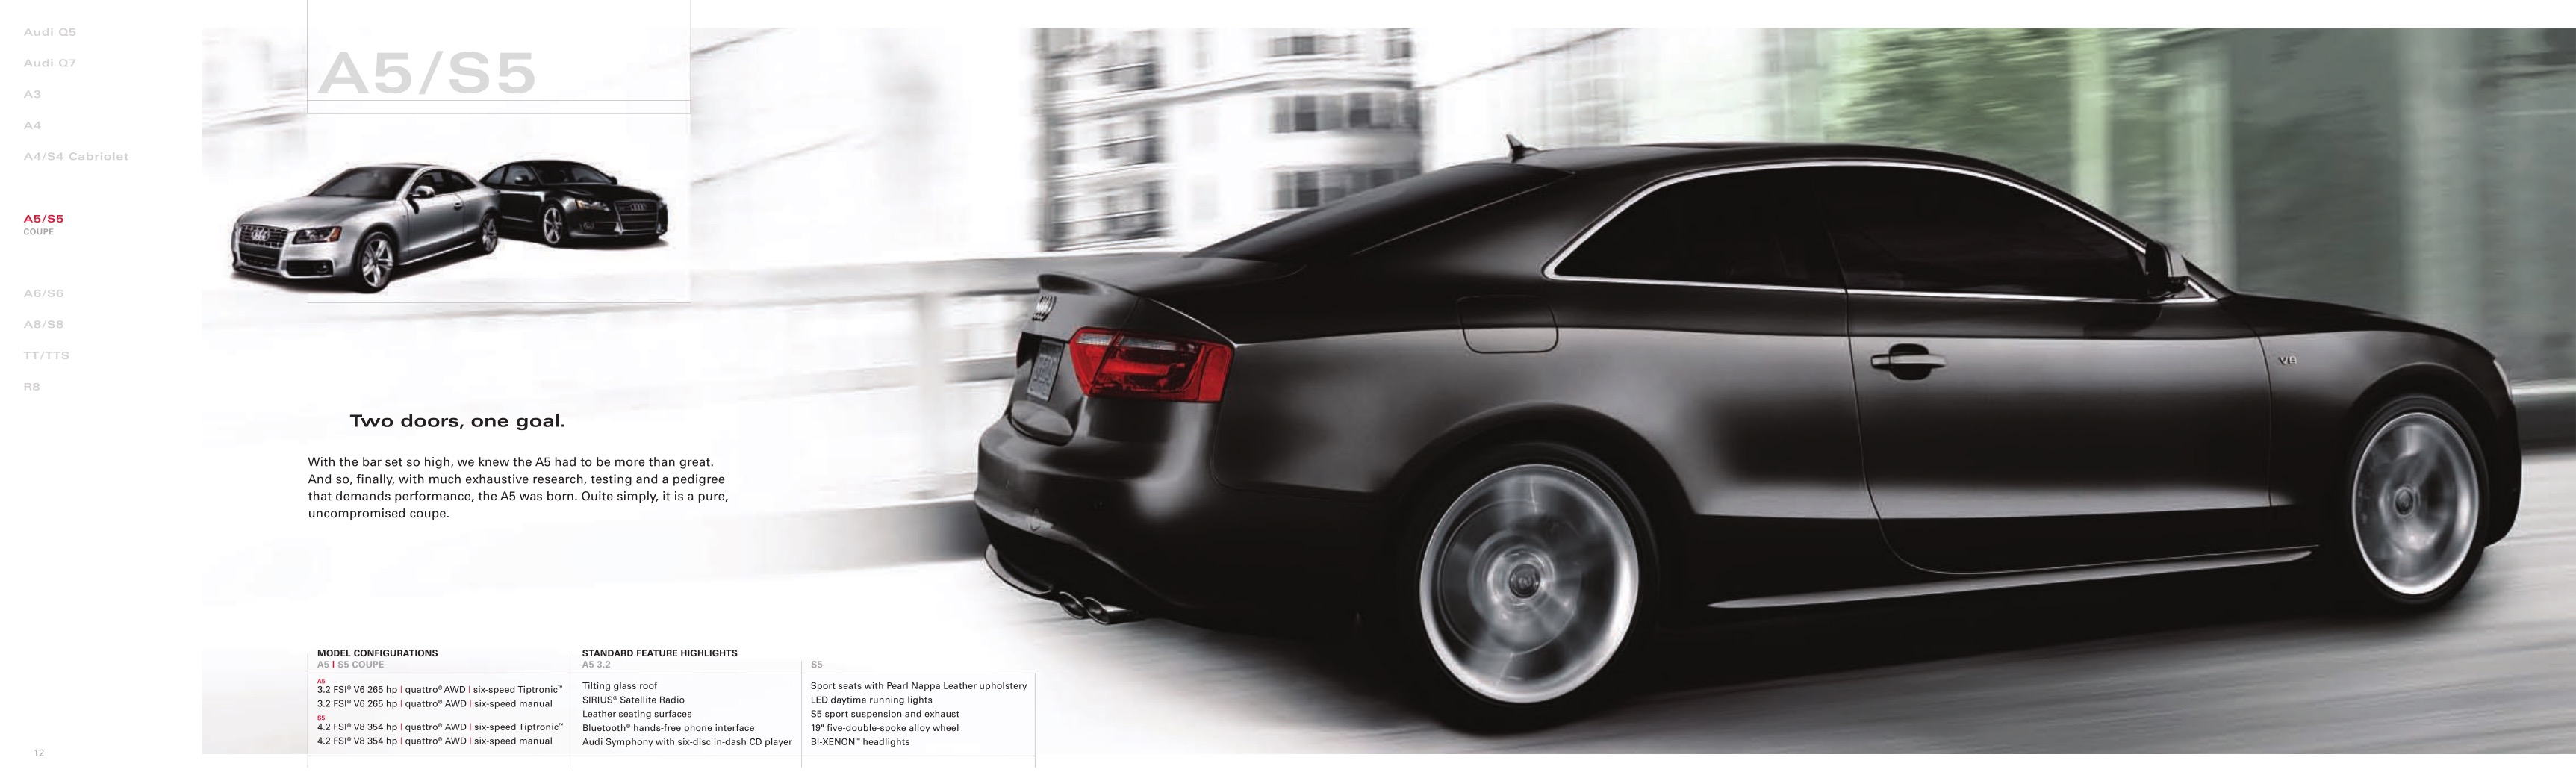 2009 Audi Brochure Page 11